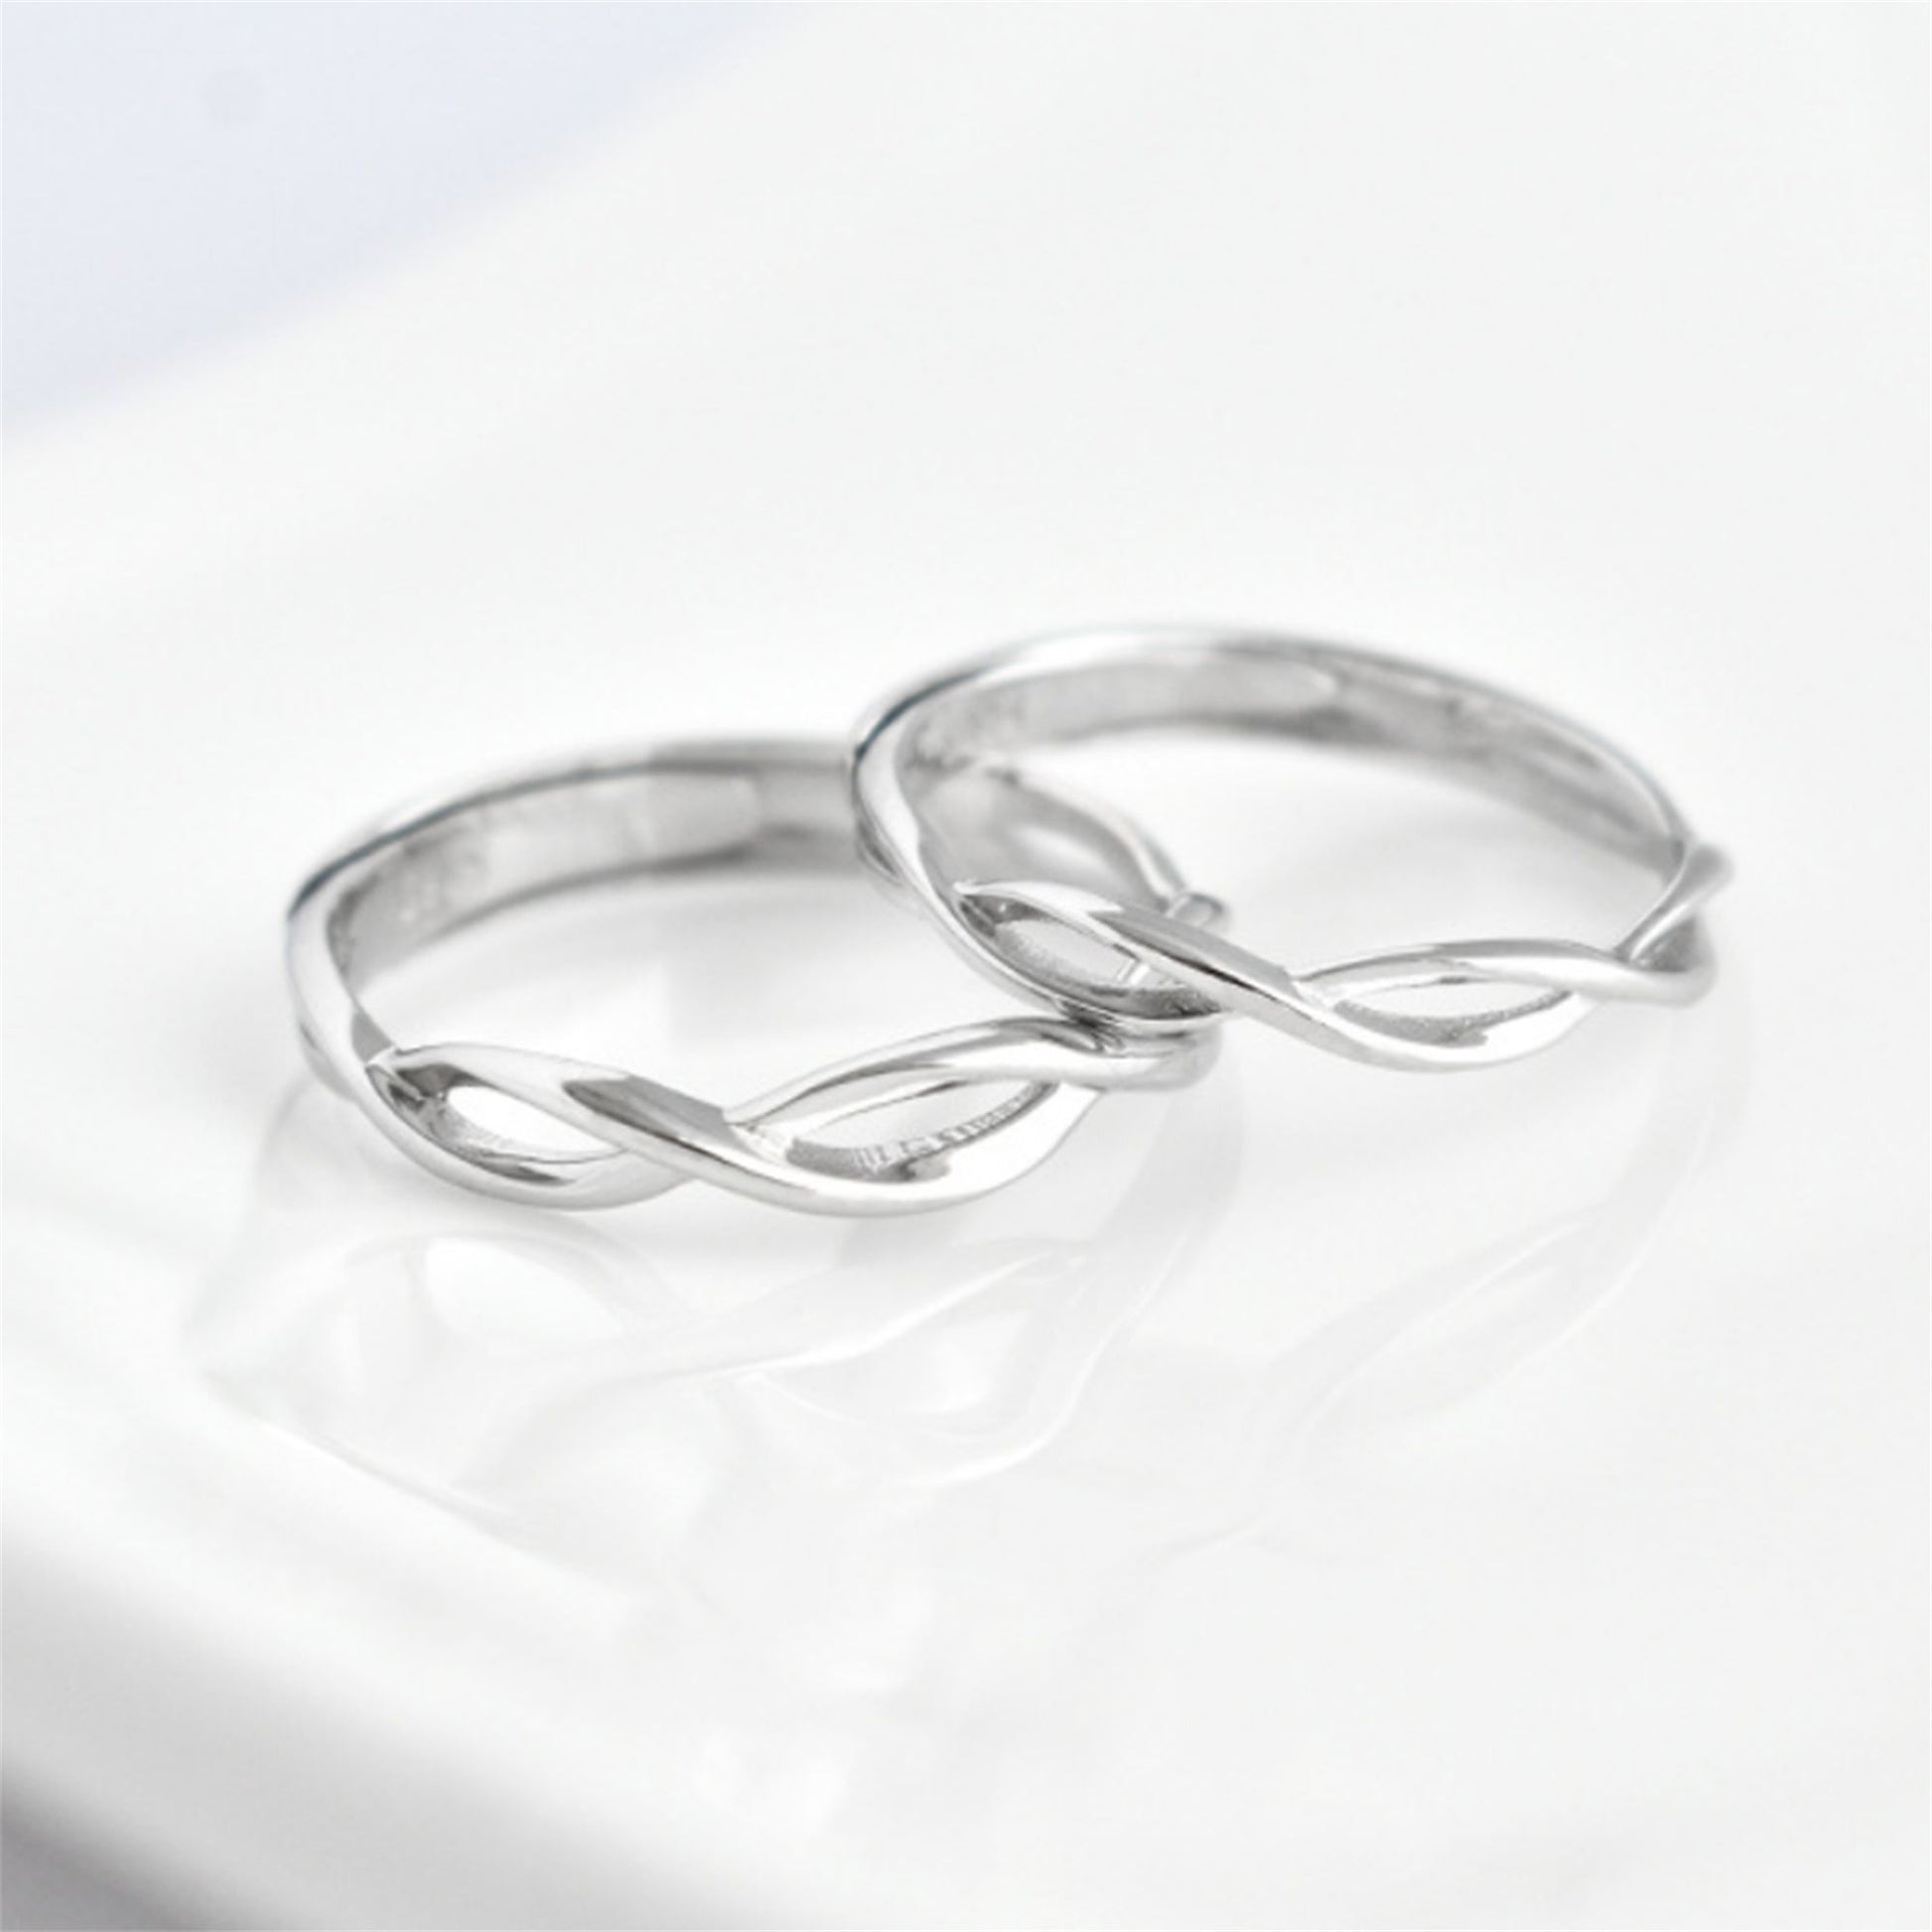 Adjustable 2 Sterling Silver Criss Cross Infinity Love Knot Couple Rings - sugarkittenlondon